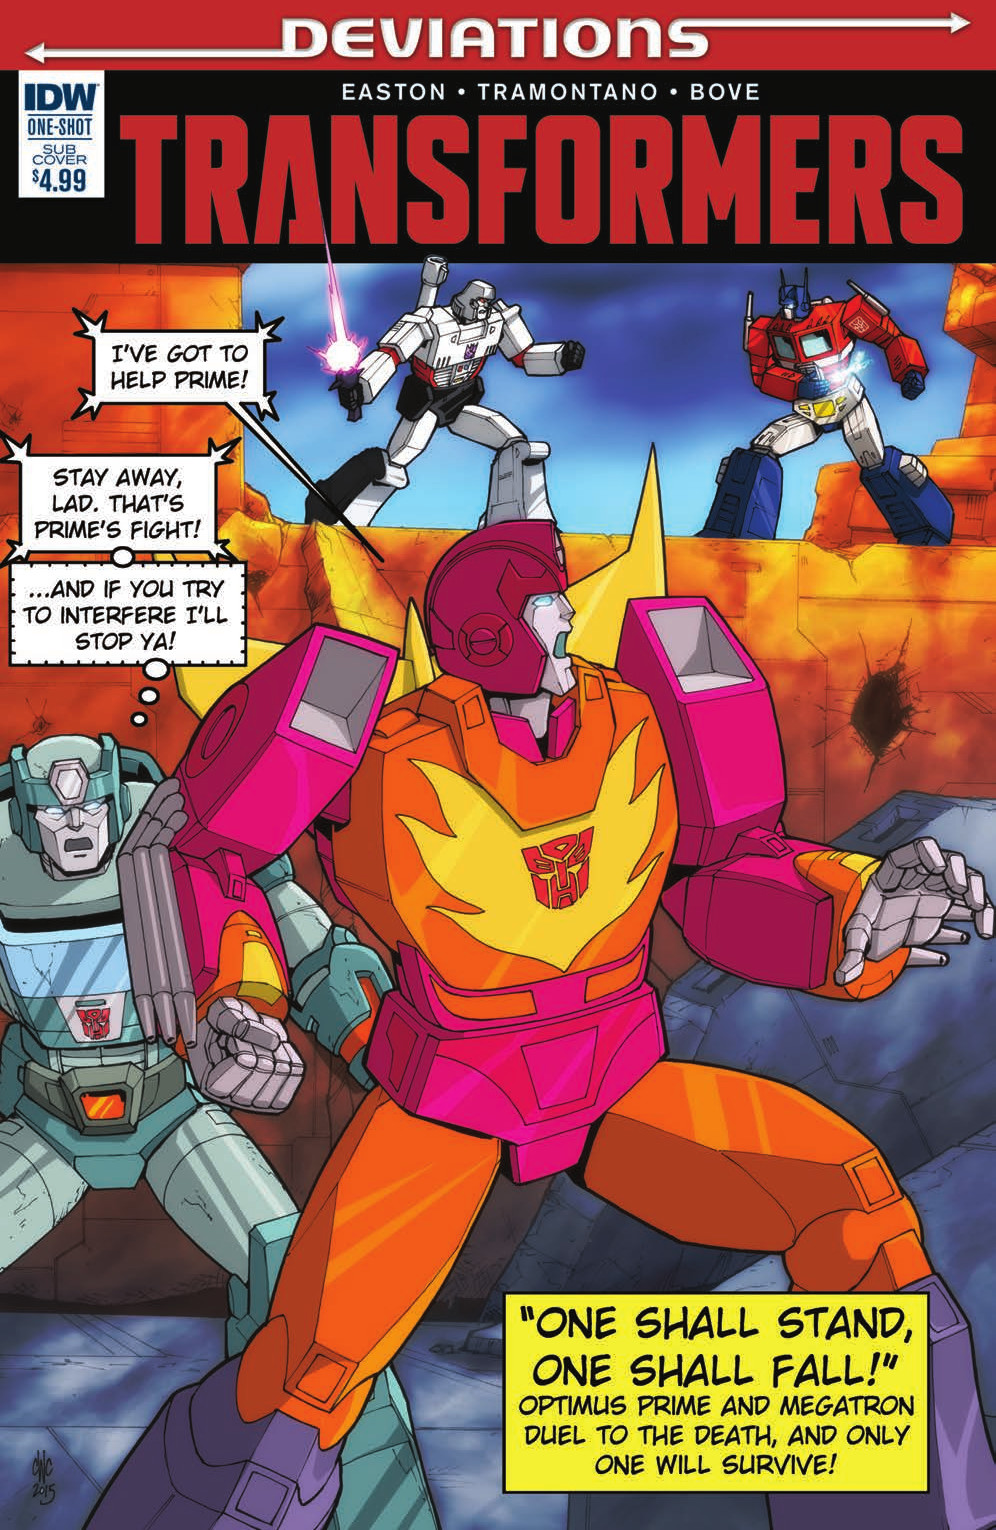 Transformers: Deviations' Subtle Indictment